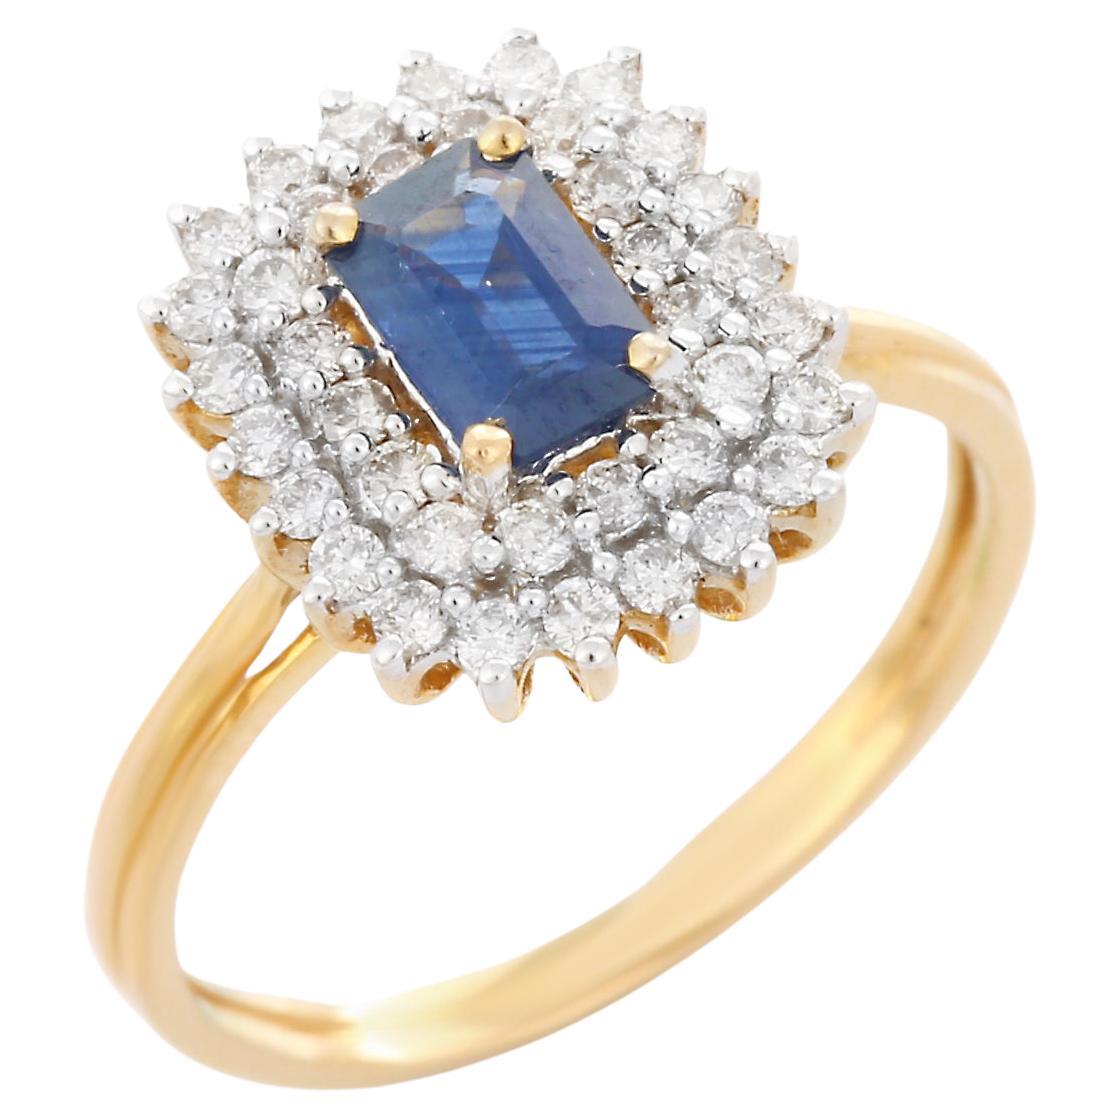 Regal Bague de mariage en or jaune massif 18 carats avec saphir bleu et halo de diamants